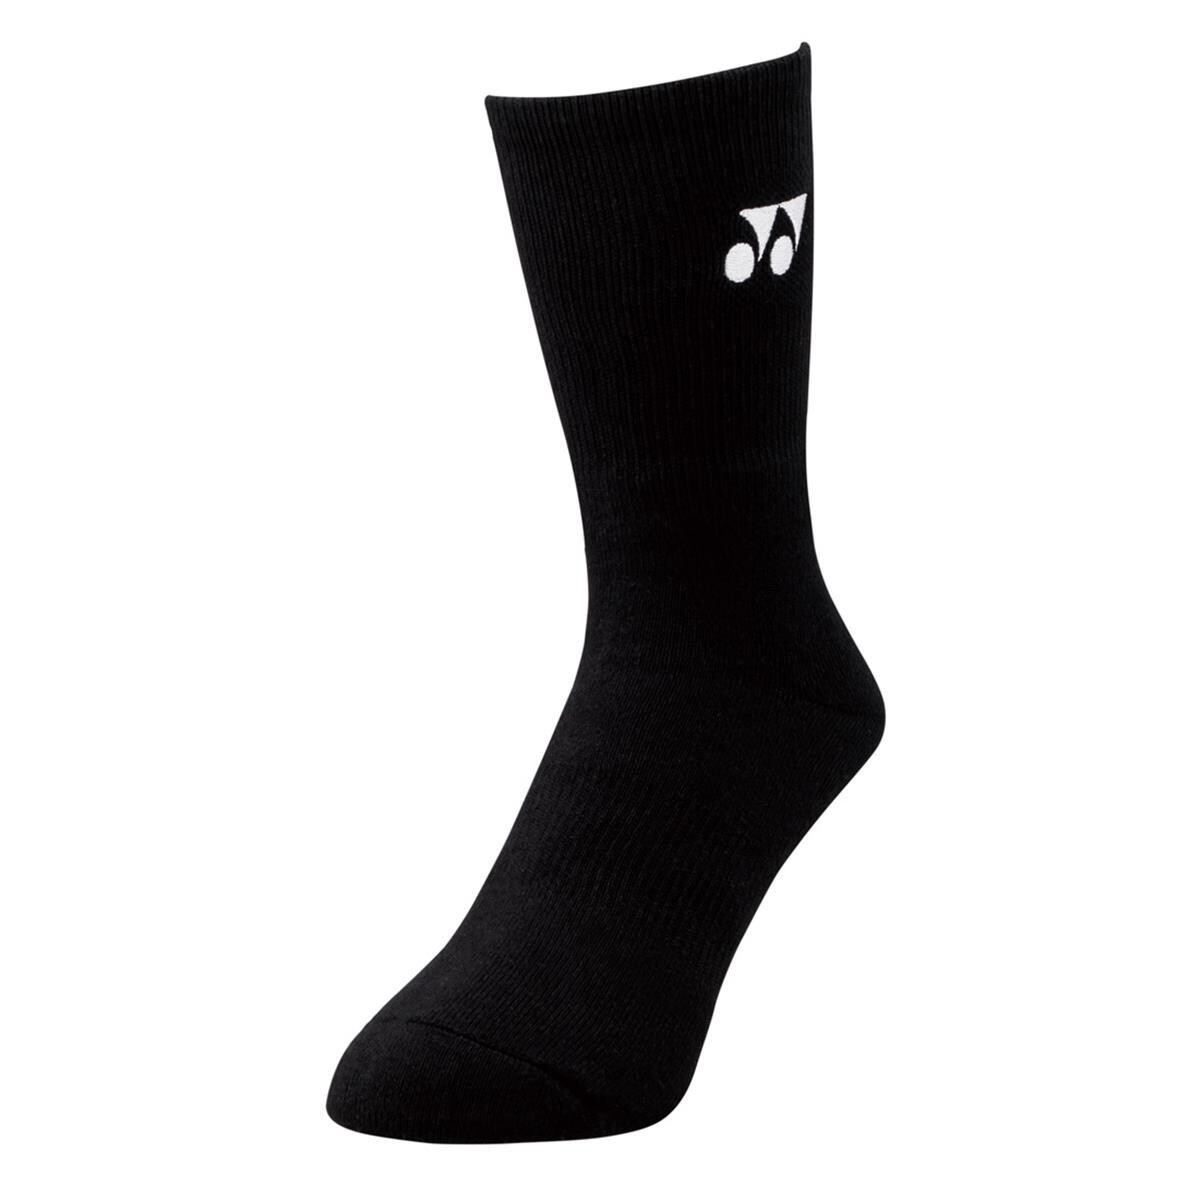 Yonex Socks 19120 Black - 1 Pair